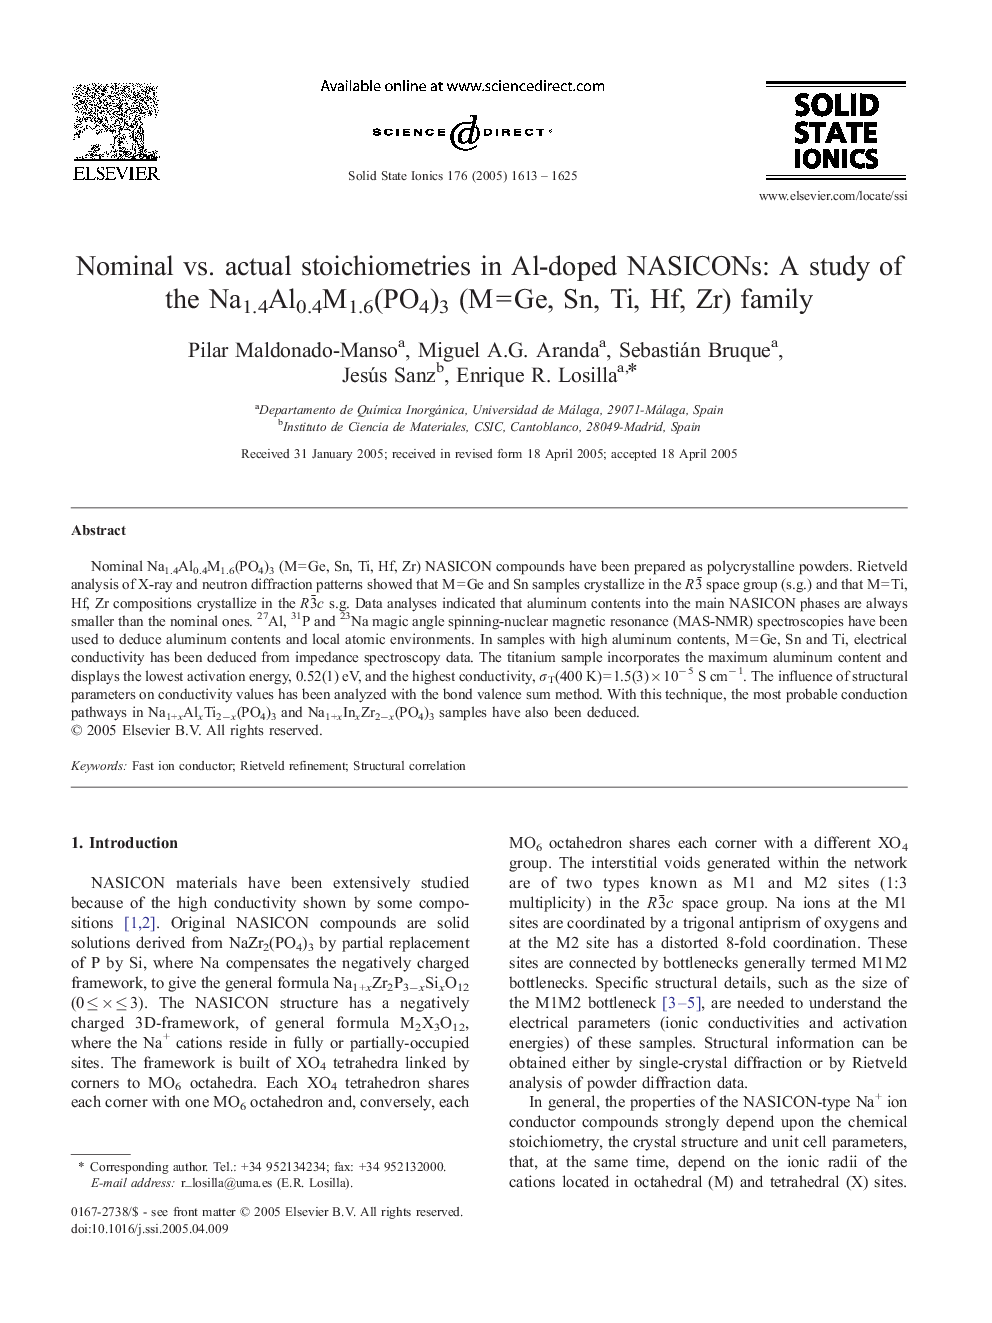 Nominal vs. actual stoichiometries in Al-doped NASICONs: A study of the Na1.4Al0.4M1.6(PO4)3 (MÂ =Â Ge, Sn, Ti, Hf, Zr) family